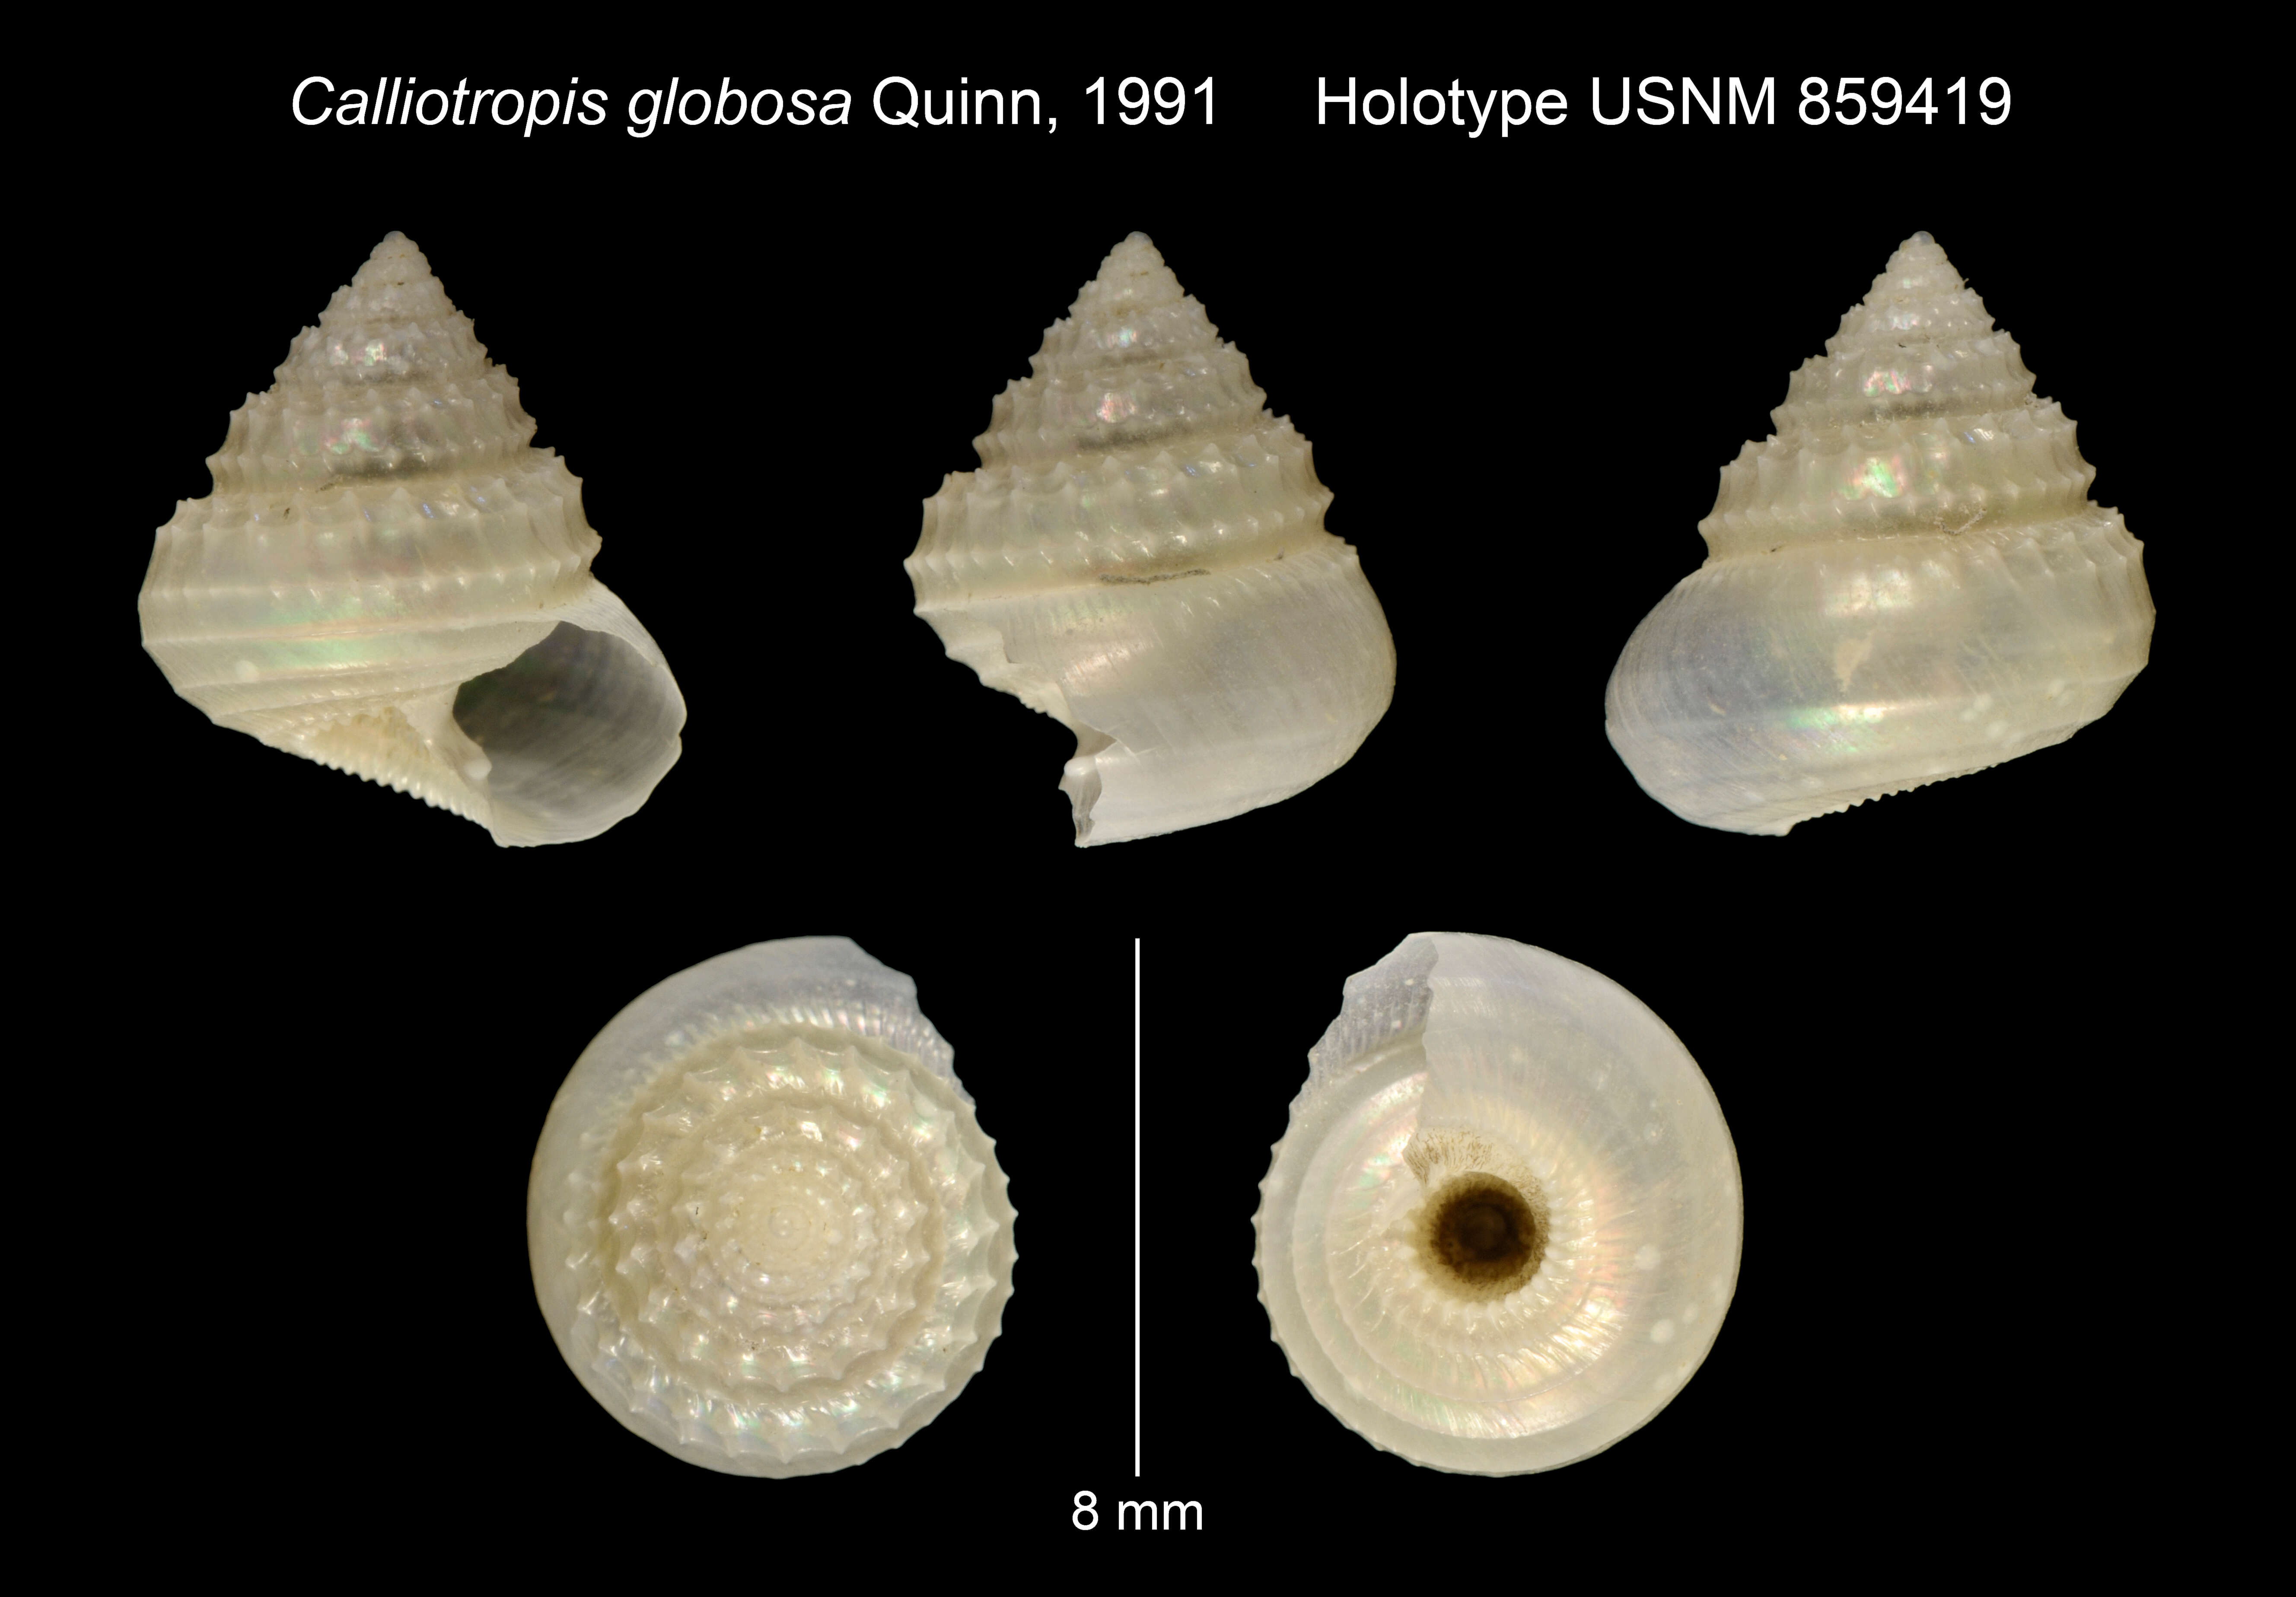 Image of Calliotropis globosa Quinn 1991